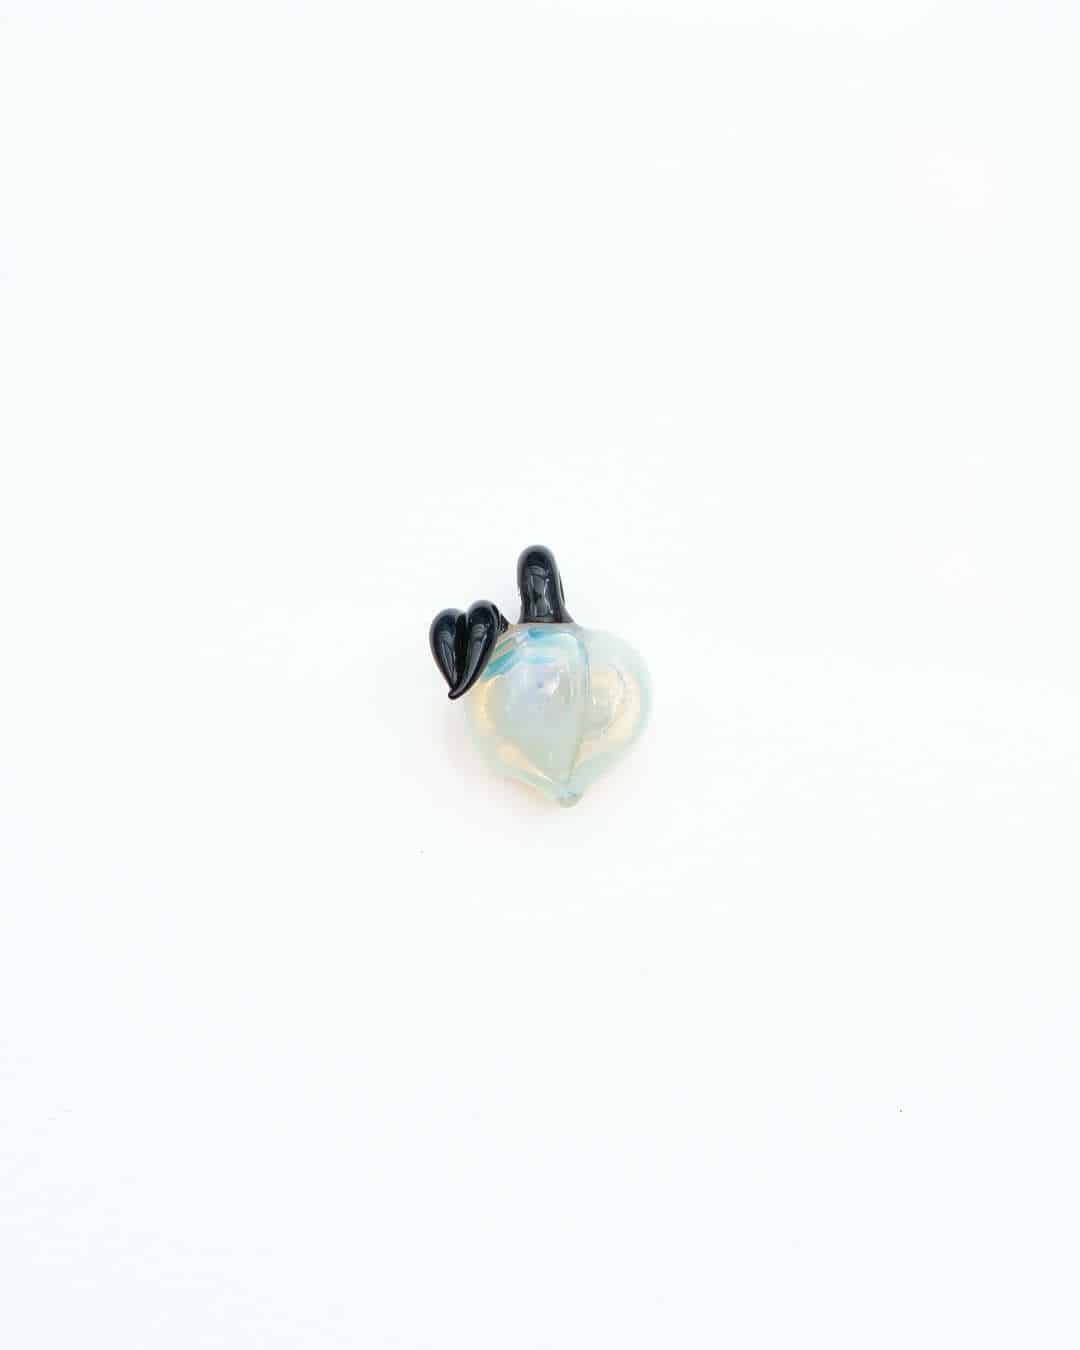 artisan-crafted glass pendant - (40C) UV Light Blue/Pink Peach w/ Black Stem Pendant by Gnarla Carla